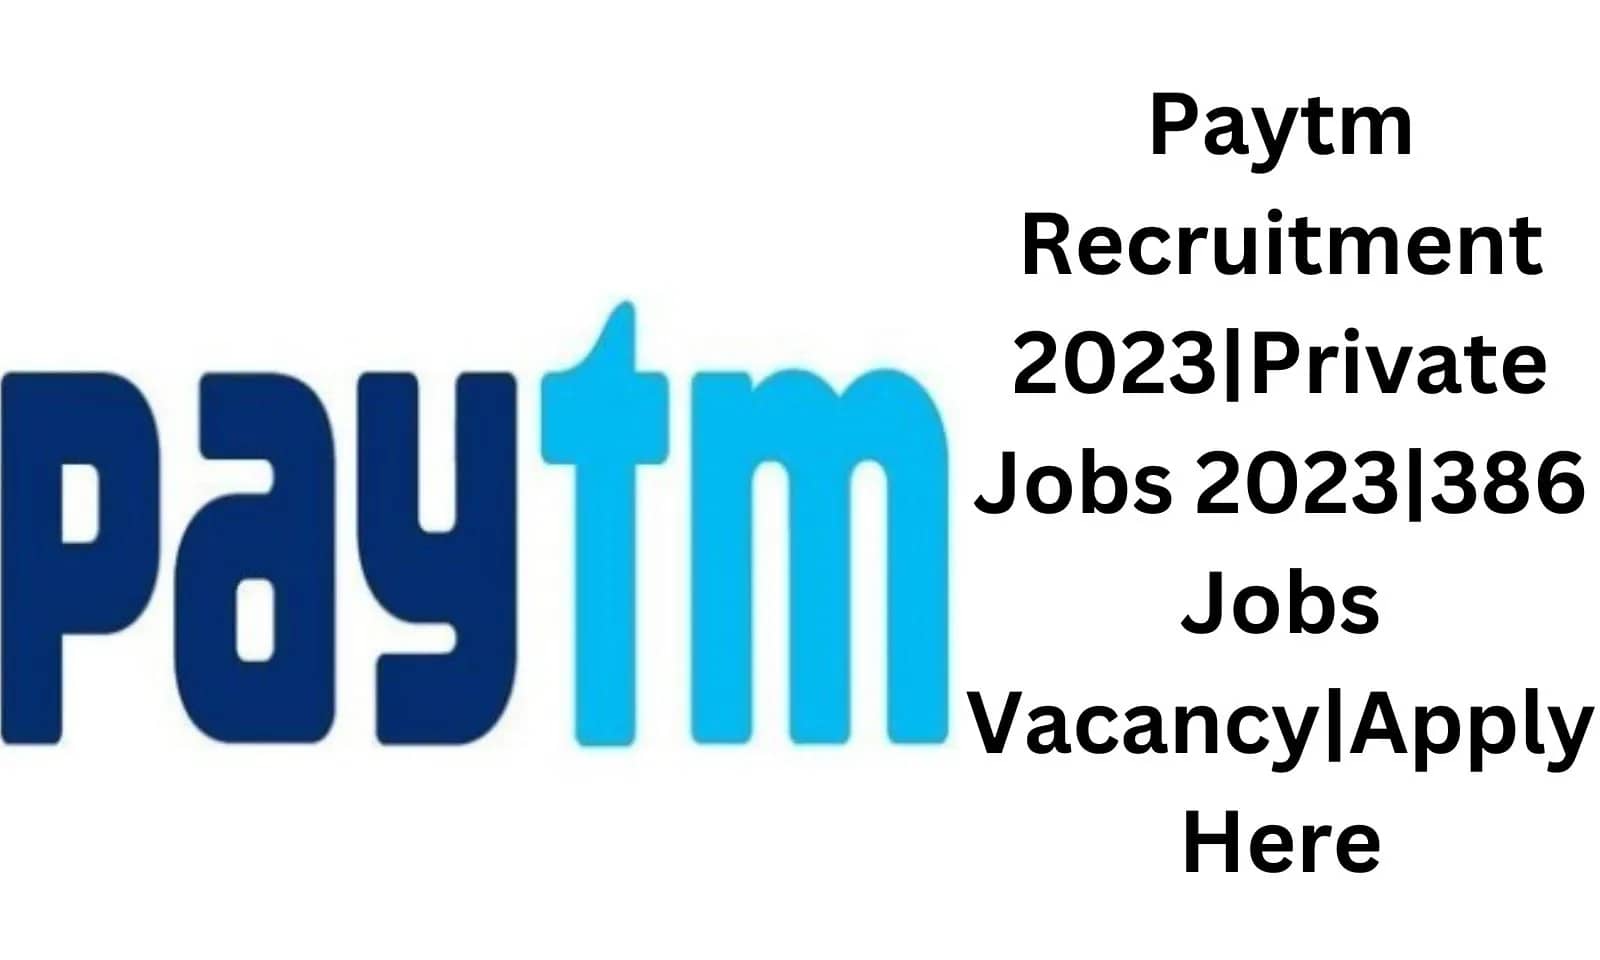 Paytm-Recruitment-2023Private-Jobs-2023386-Jobs-VacancyApply-Here